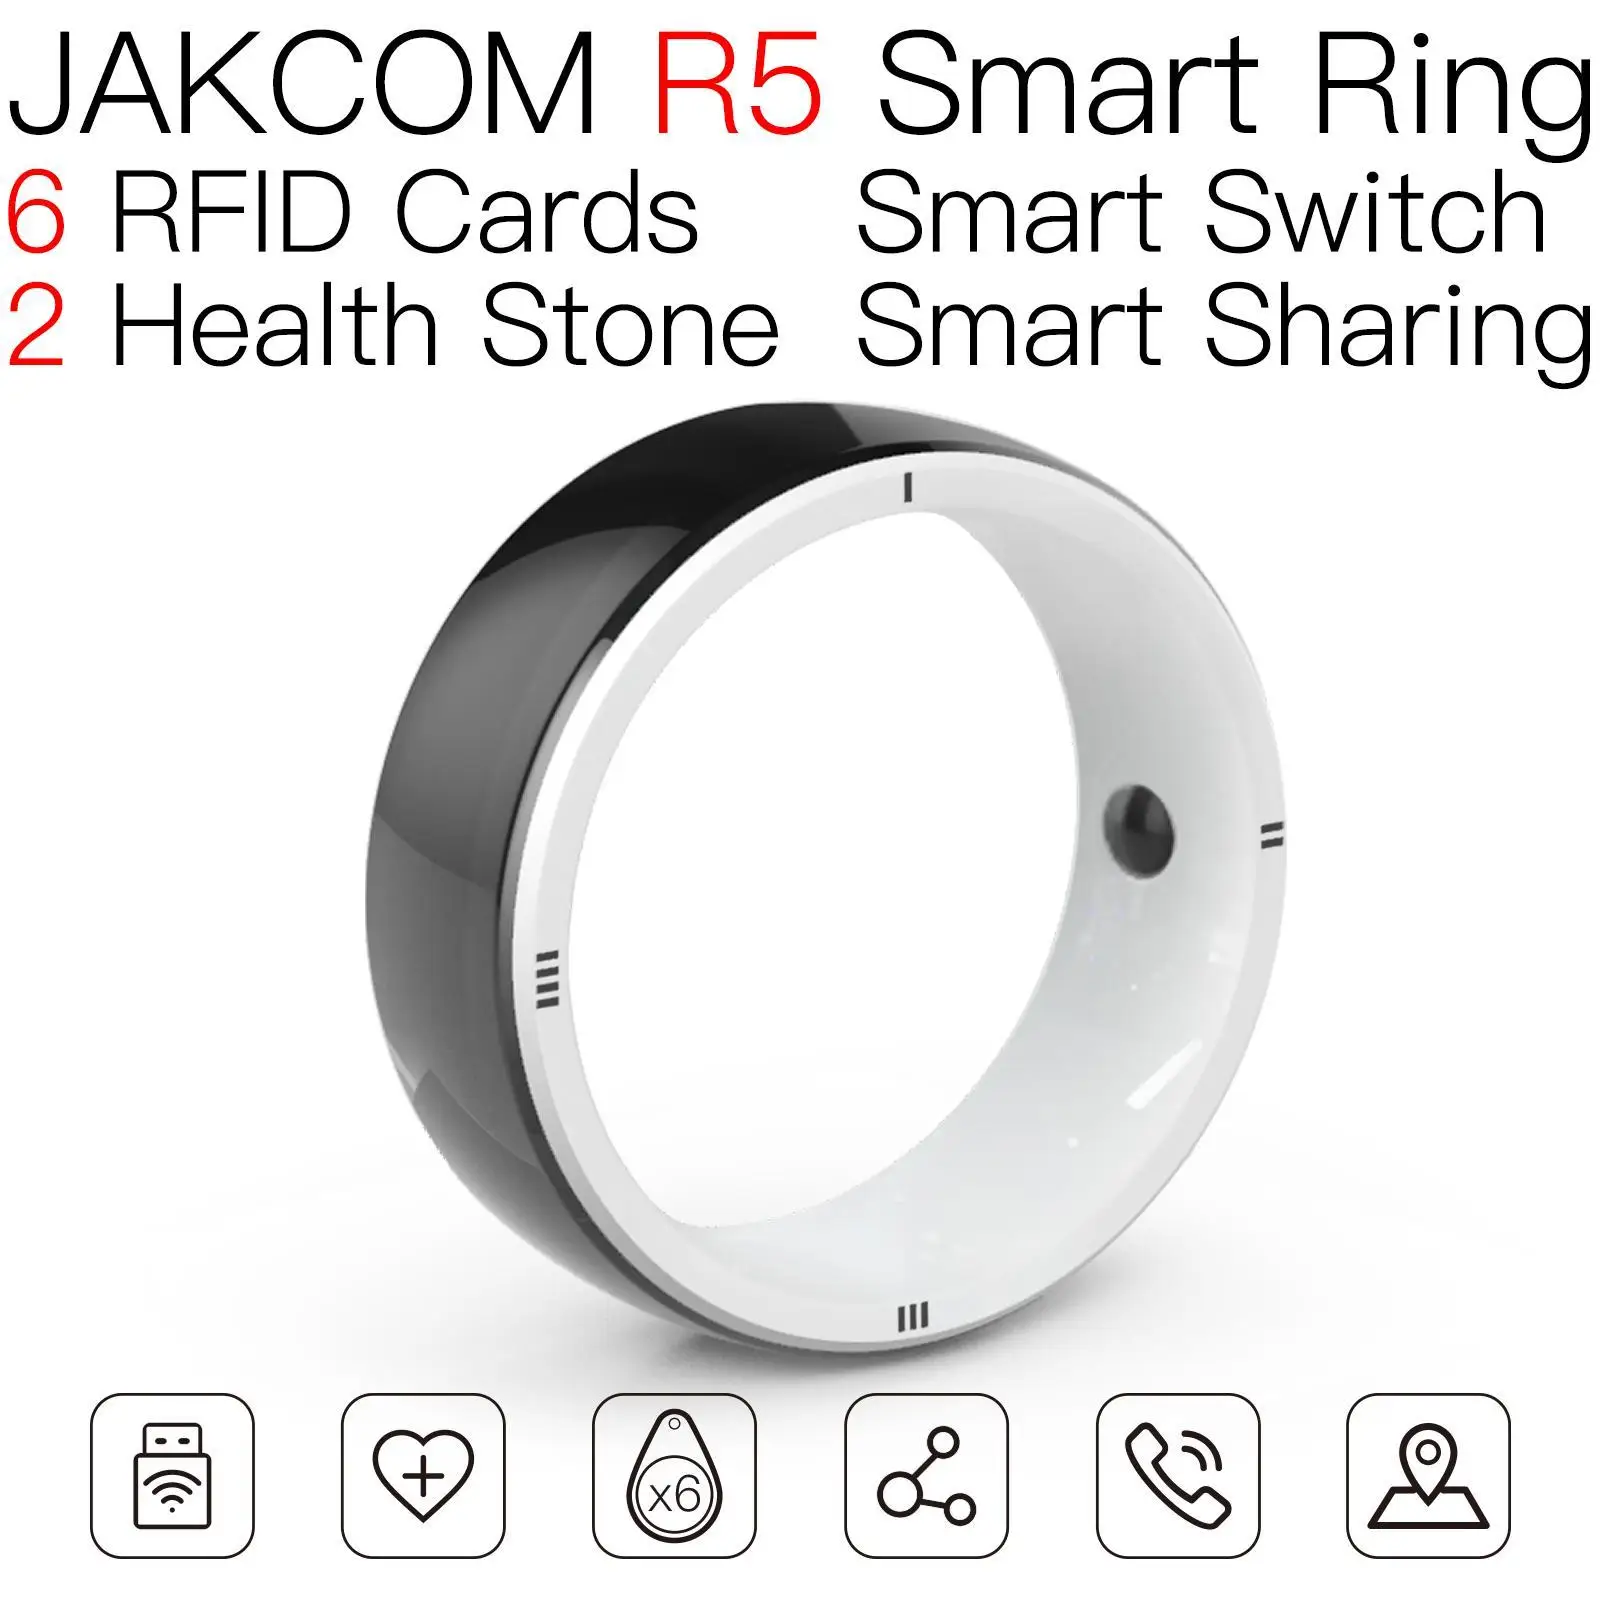 

JAKCOM R5 Smart Ring Super value than laundry tag glowing sticker nfc rf 125 hologram stickers qc serial belg pigeon rings uhf